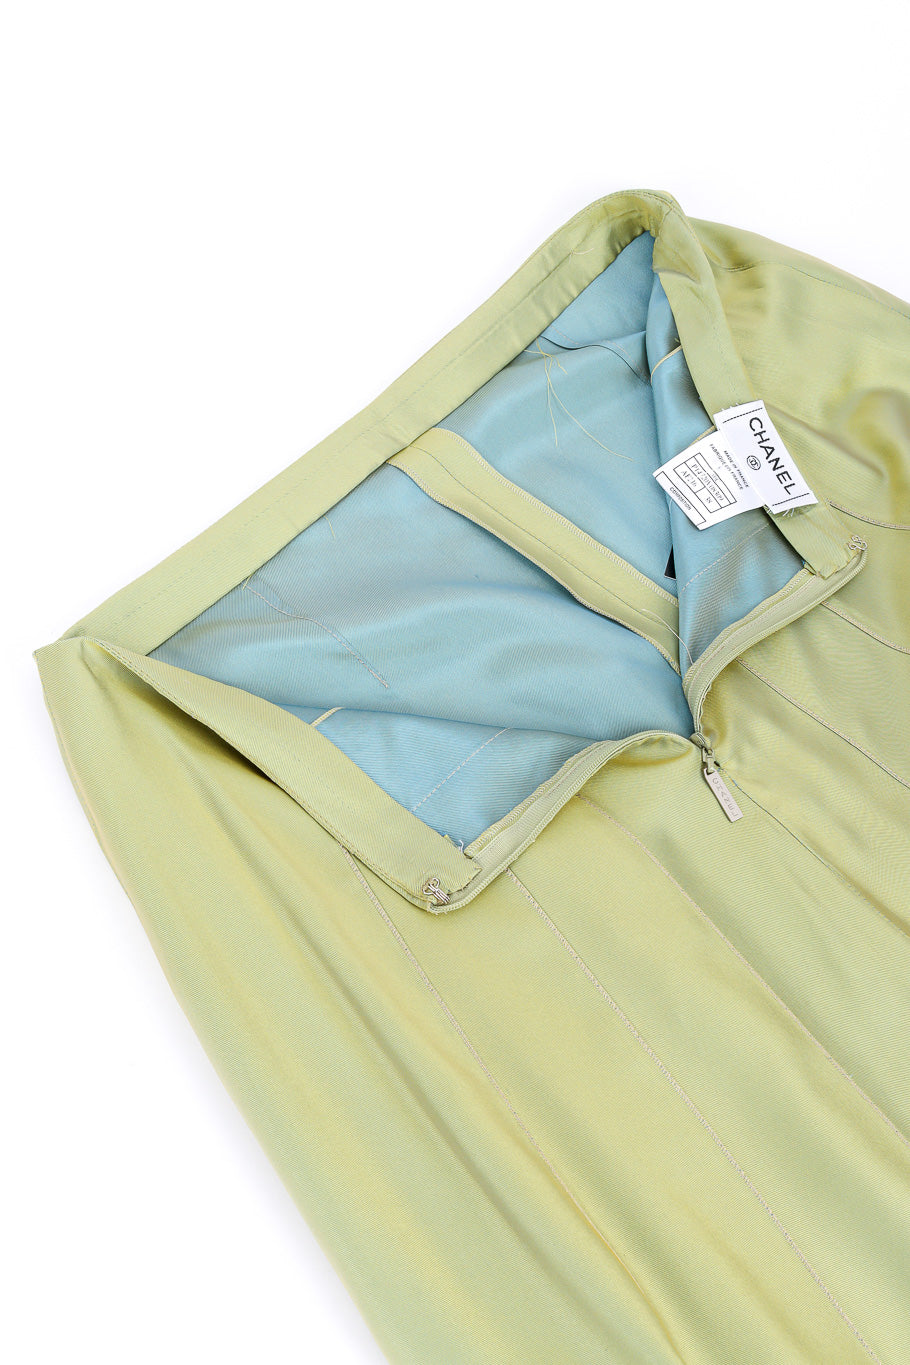 Iridescent maxi skirt by Chanel unzipped lining @recessla